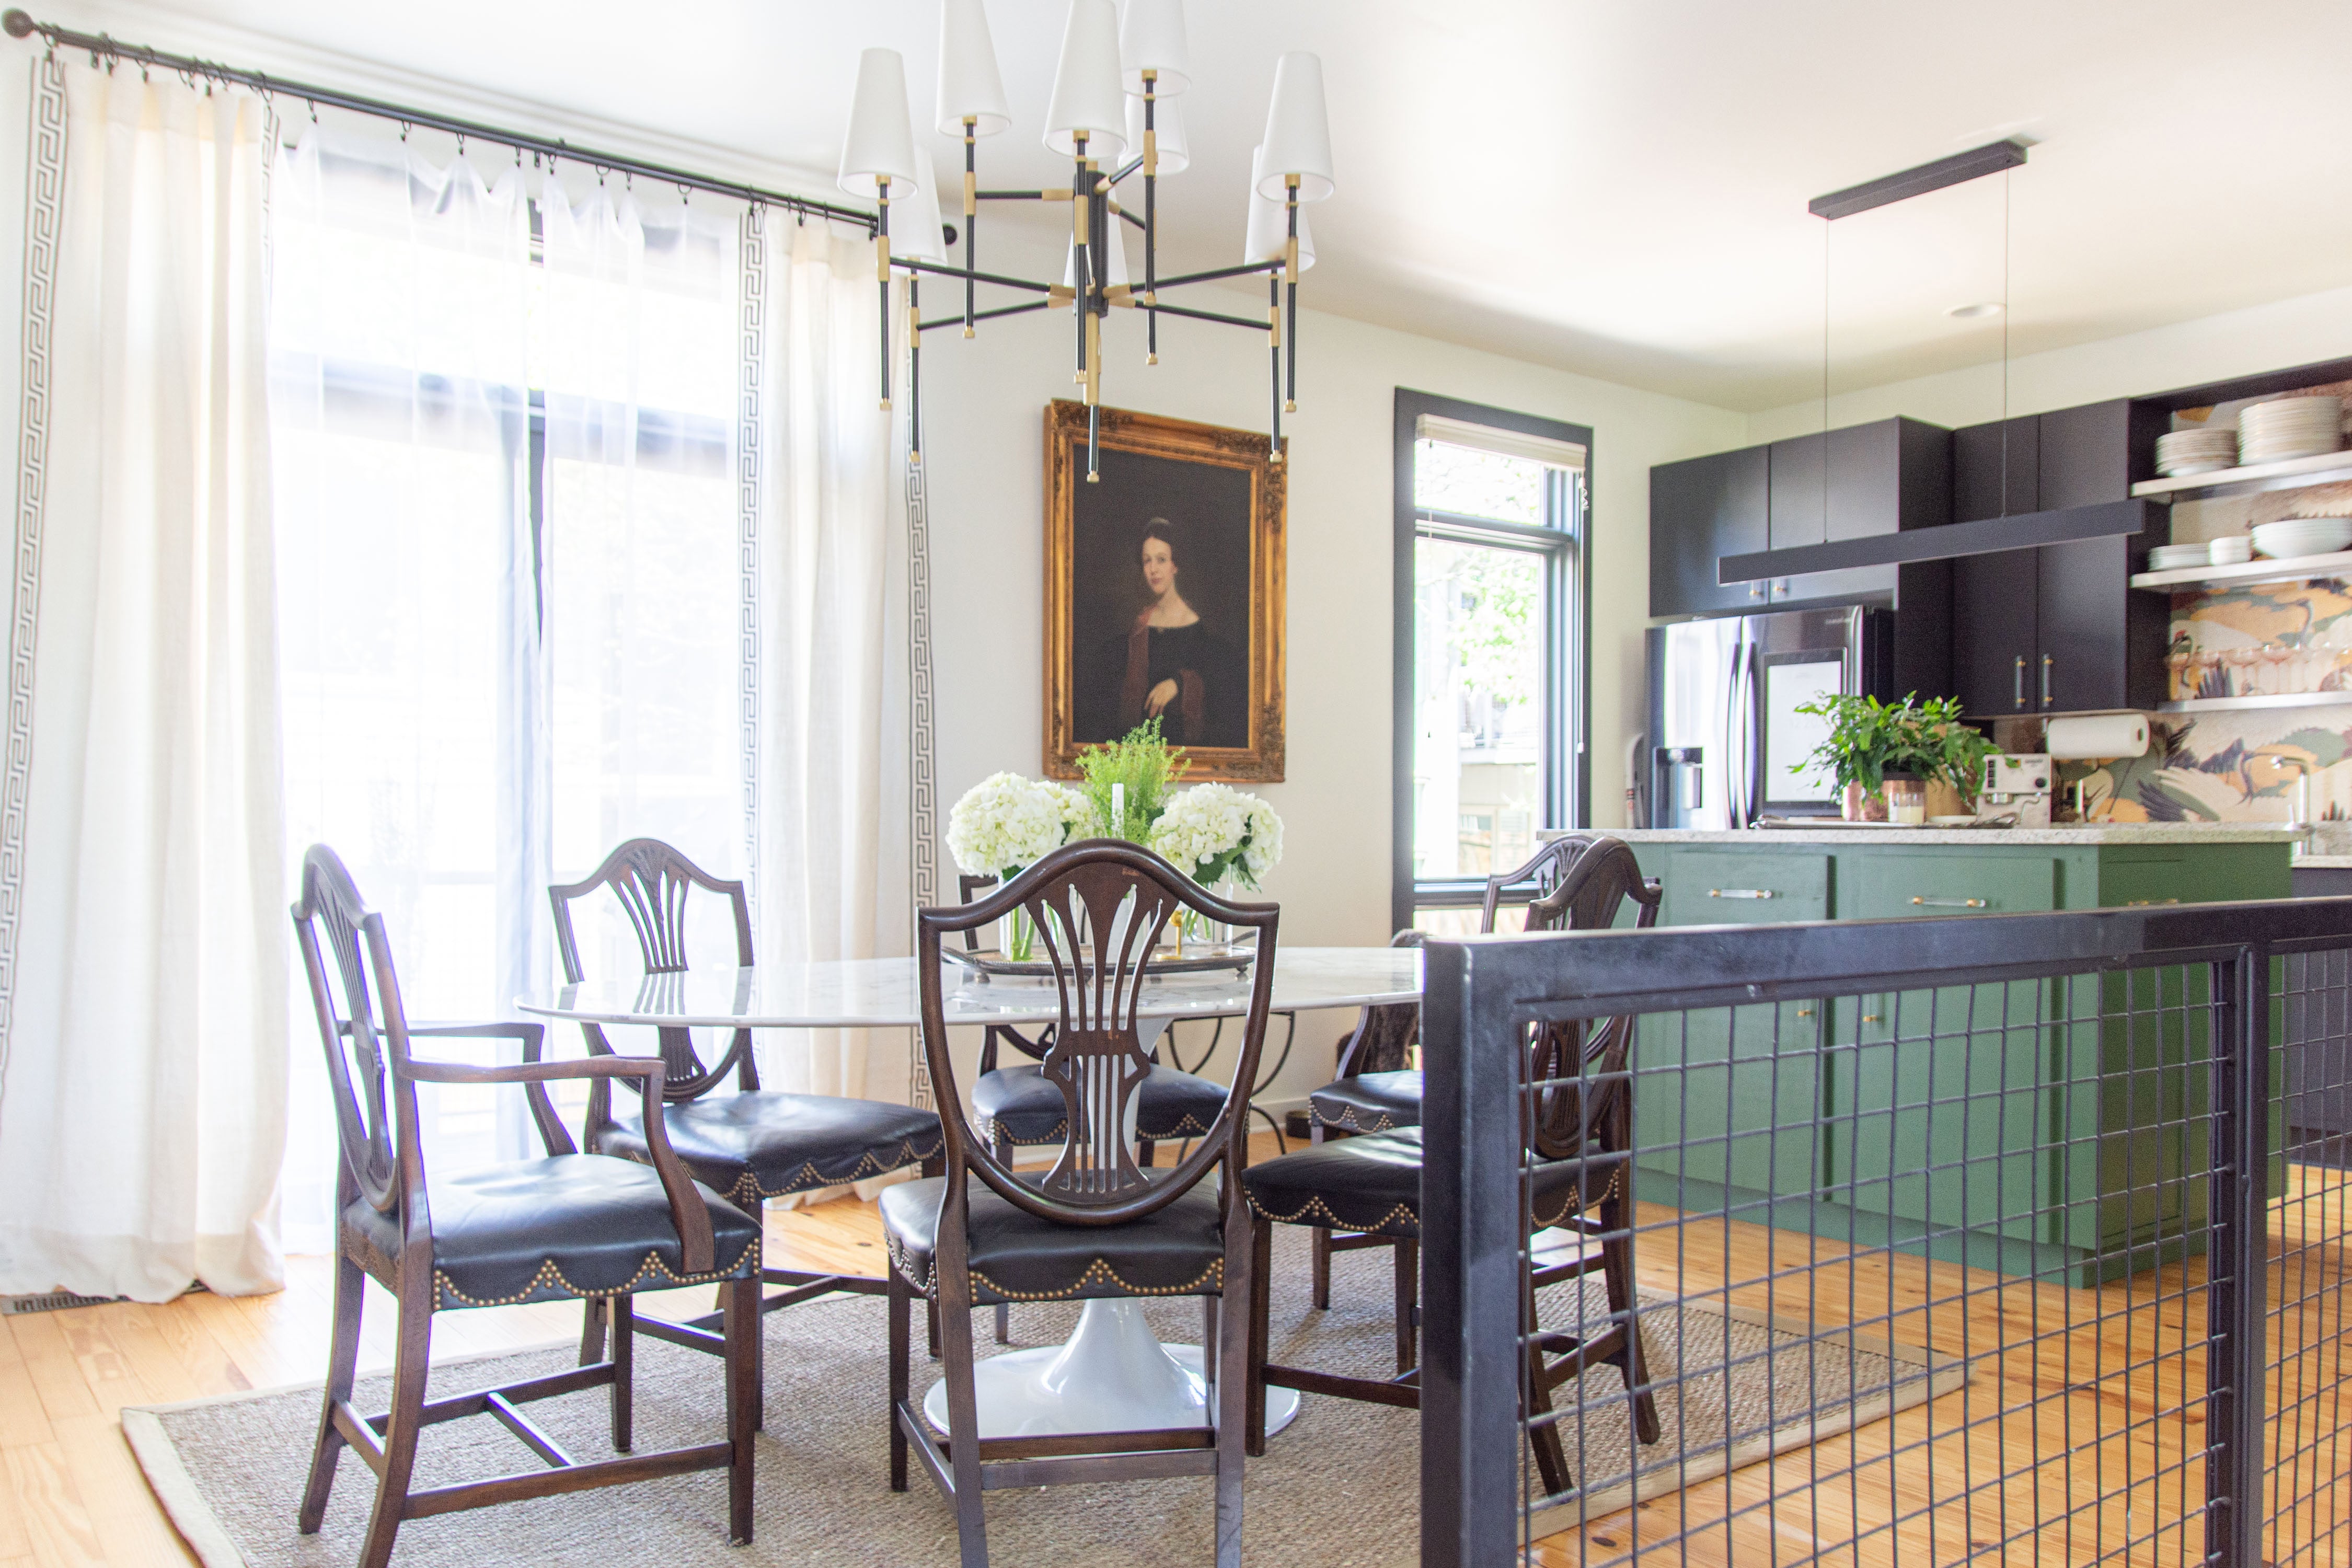 Home design by Atlanta interior designer Kevin Francis O'Gara, New Regency style, modern classic interiors, best new Southern designers